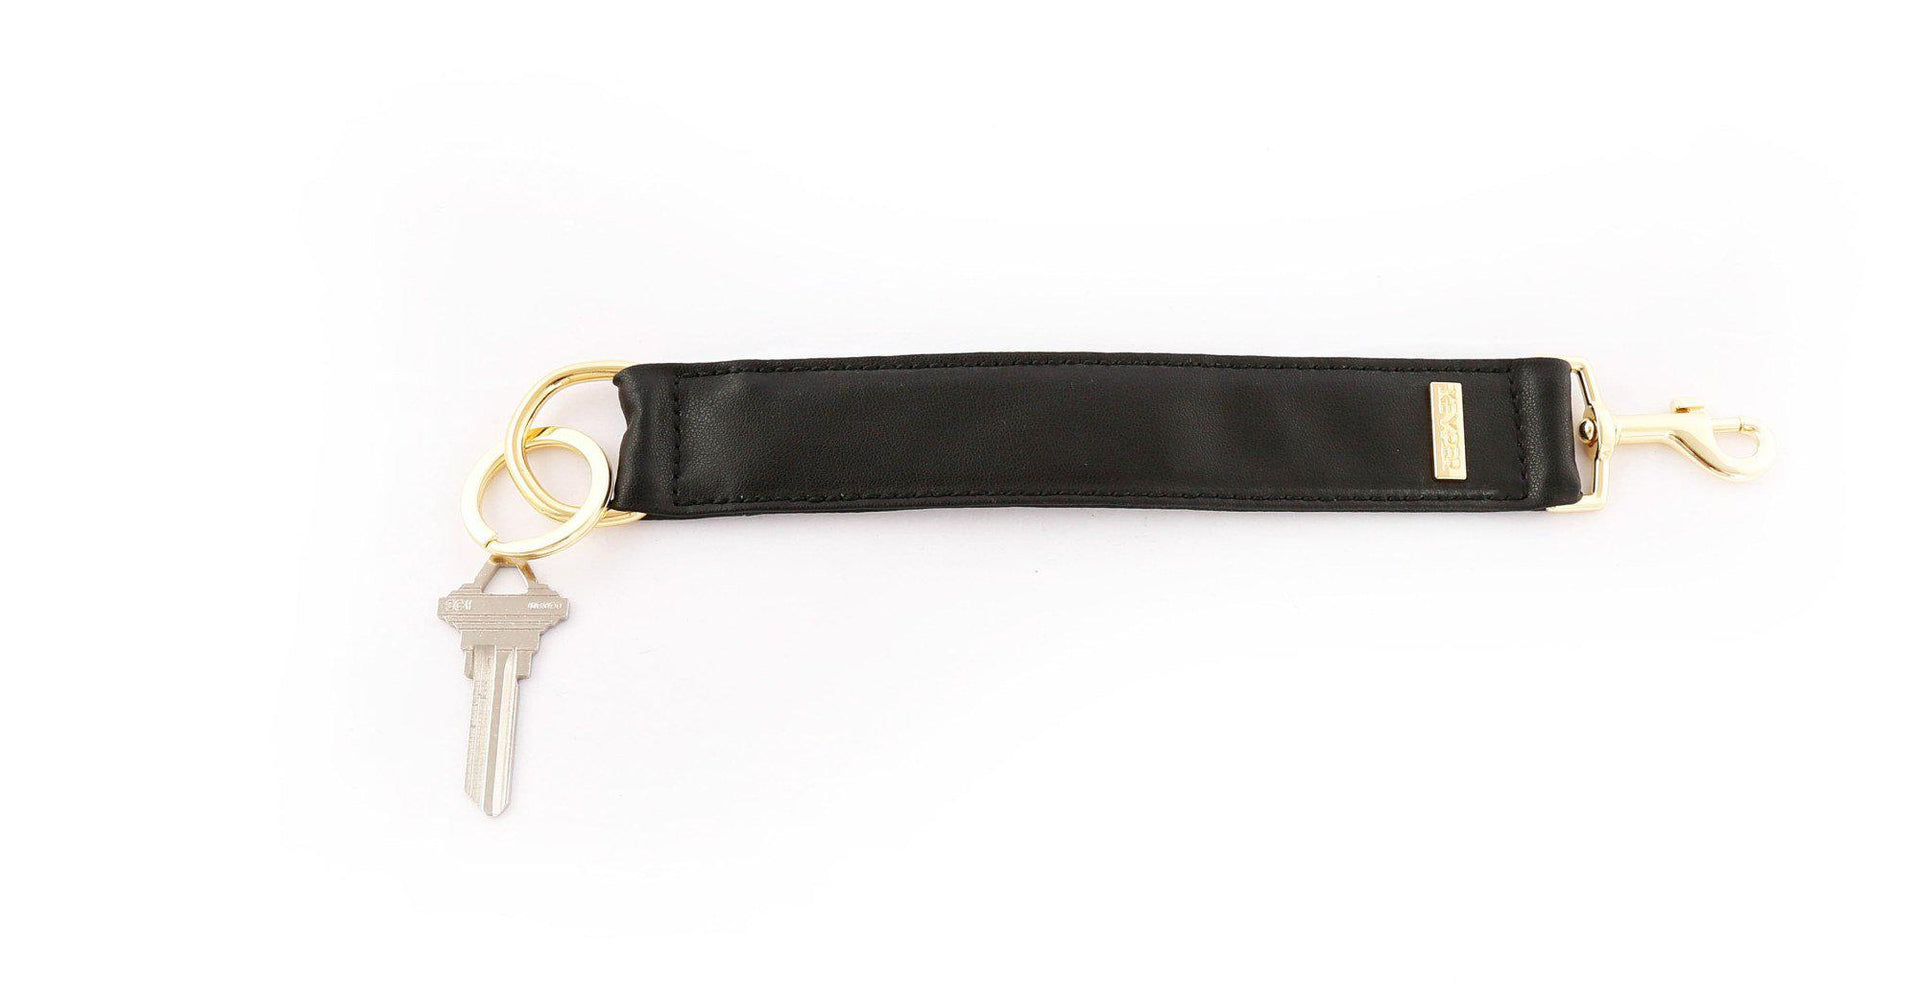 MyKEYPERStore Premium Leather Keyper Key Ring Wristlet Classic Black - High Quality Key Chain, Personalized Wristlet Gift for Her, Smart Key Holder